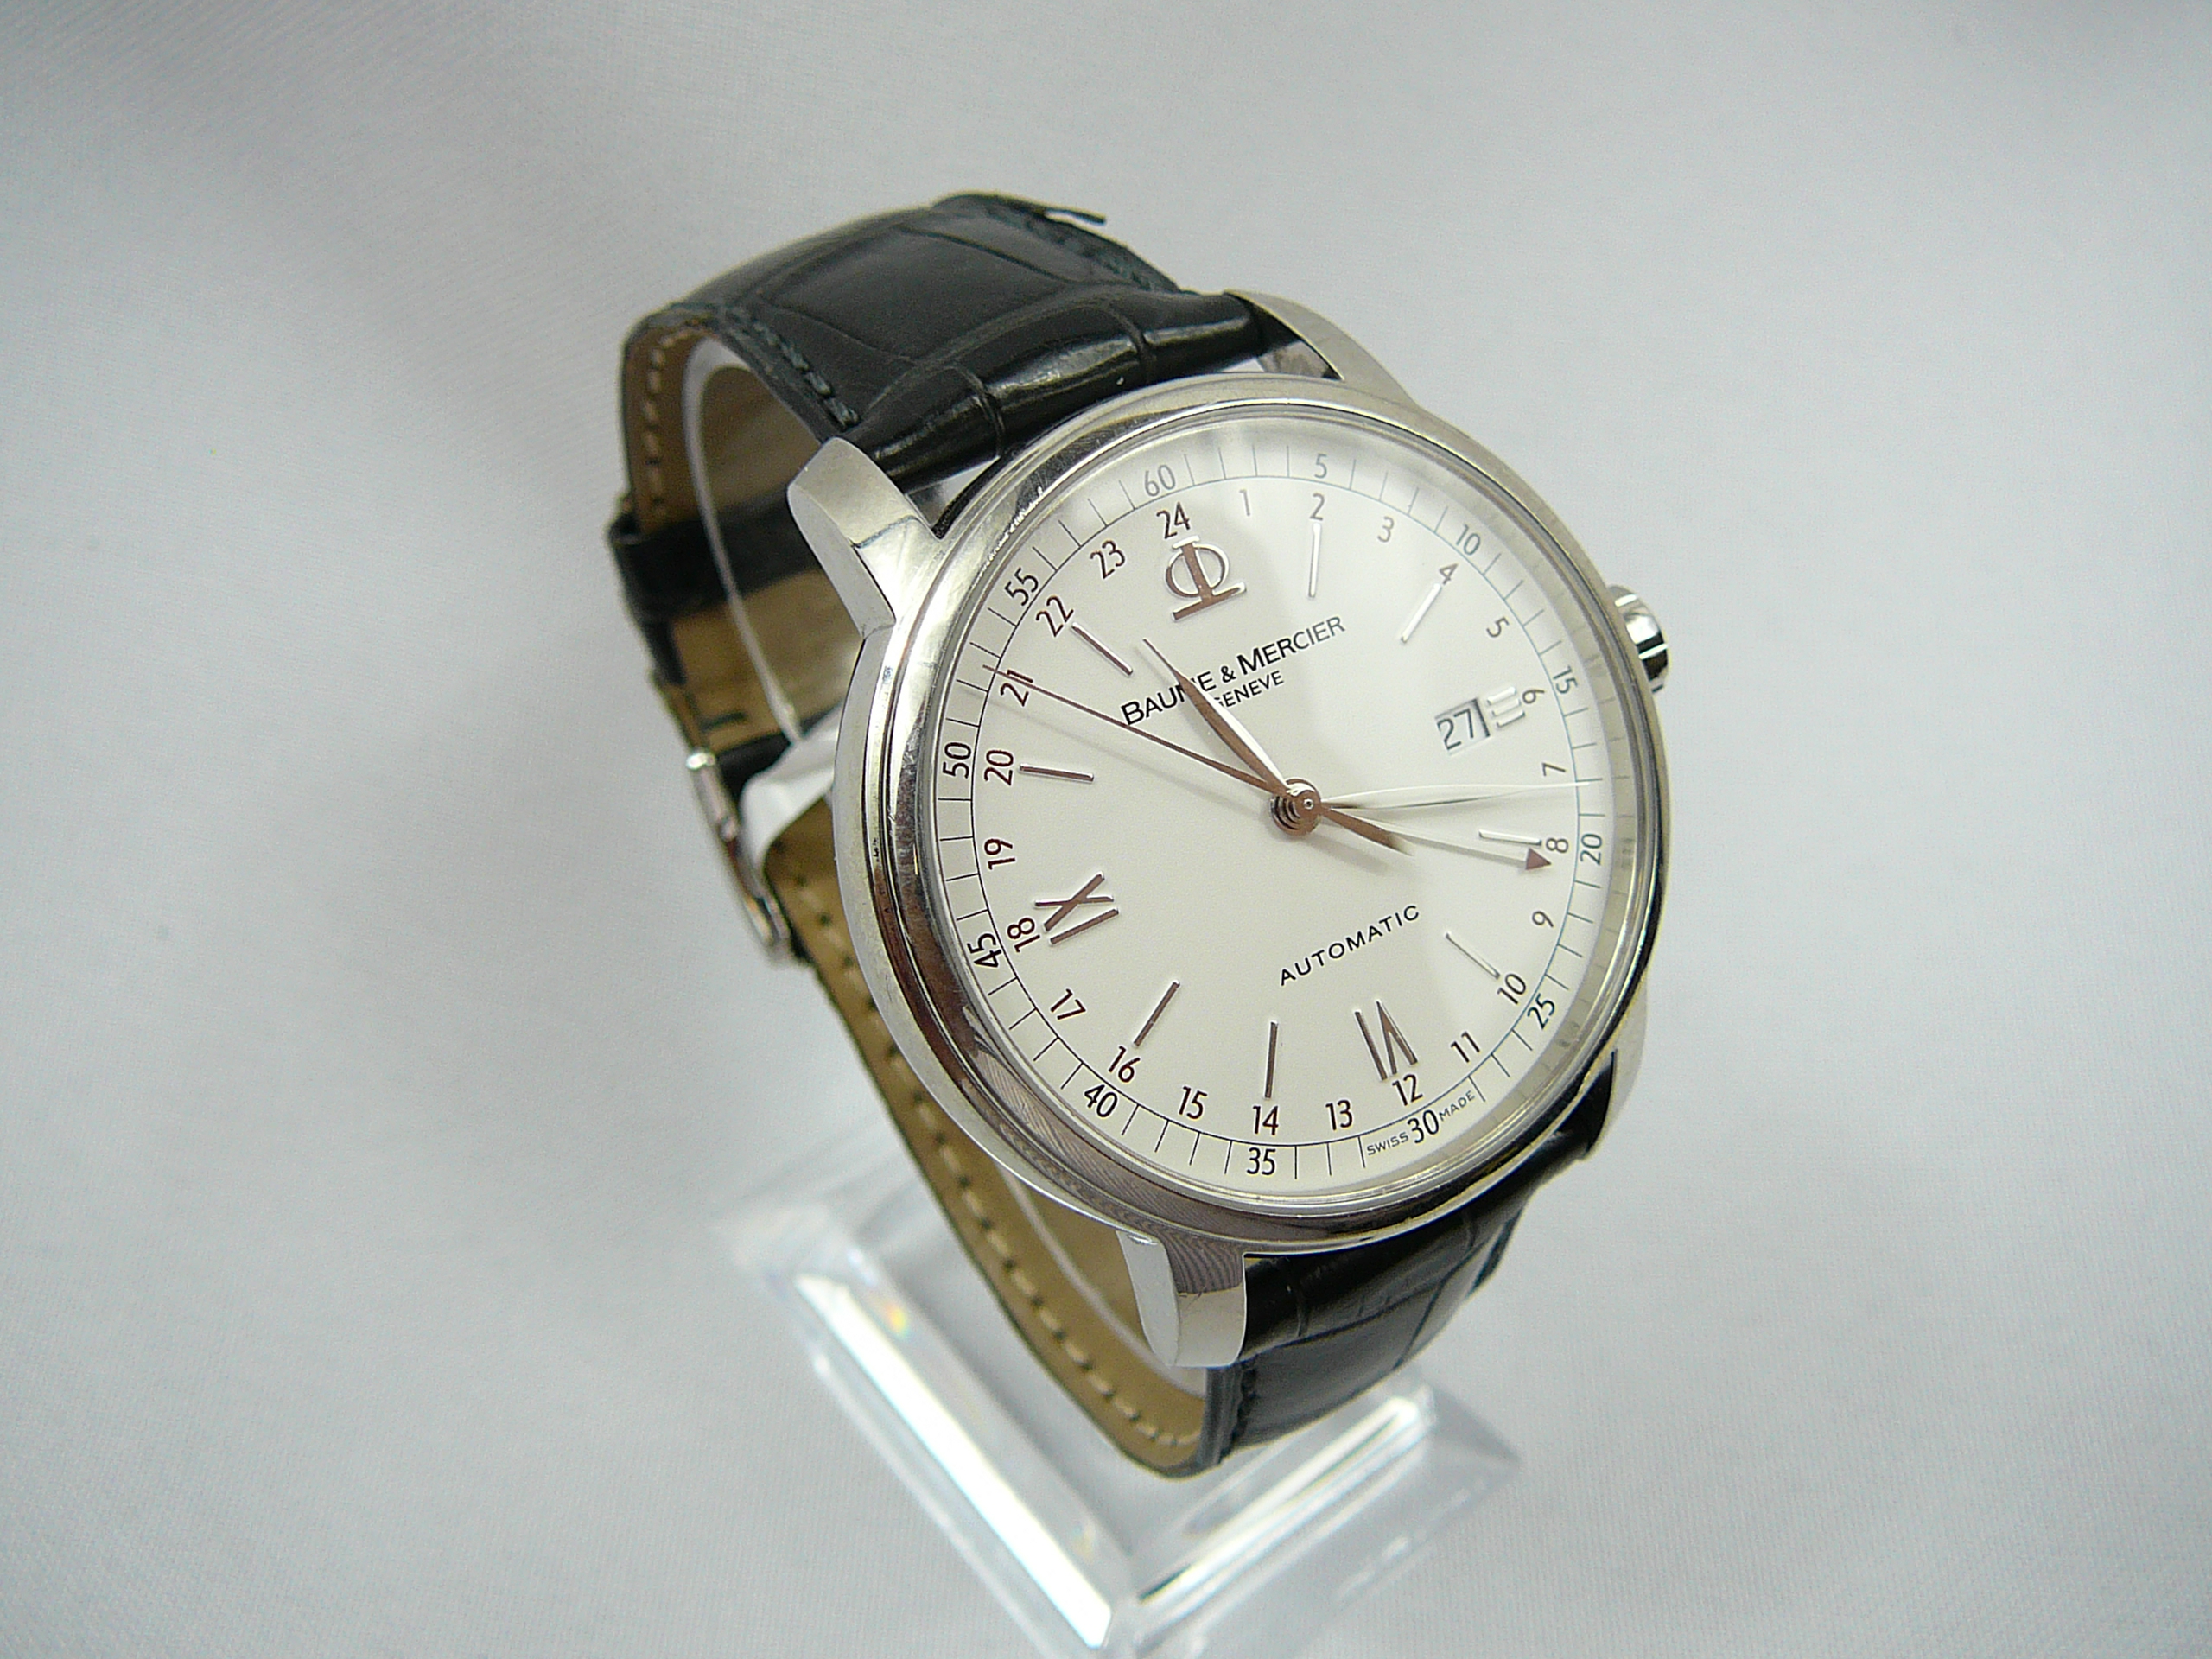 Gents Baume & Mercier wrist watch - Image 2 of 3